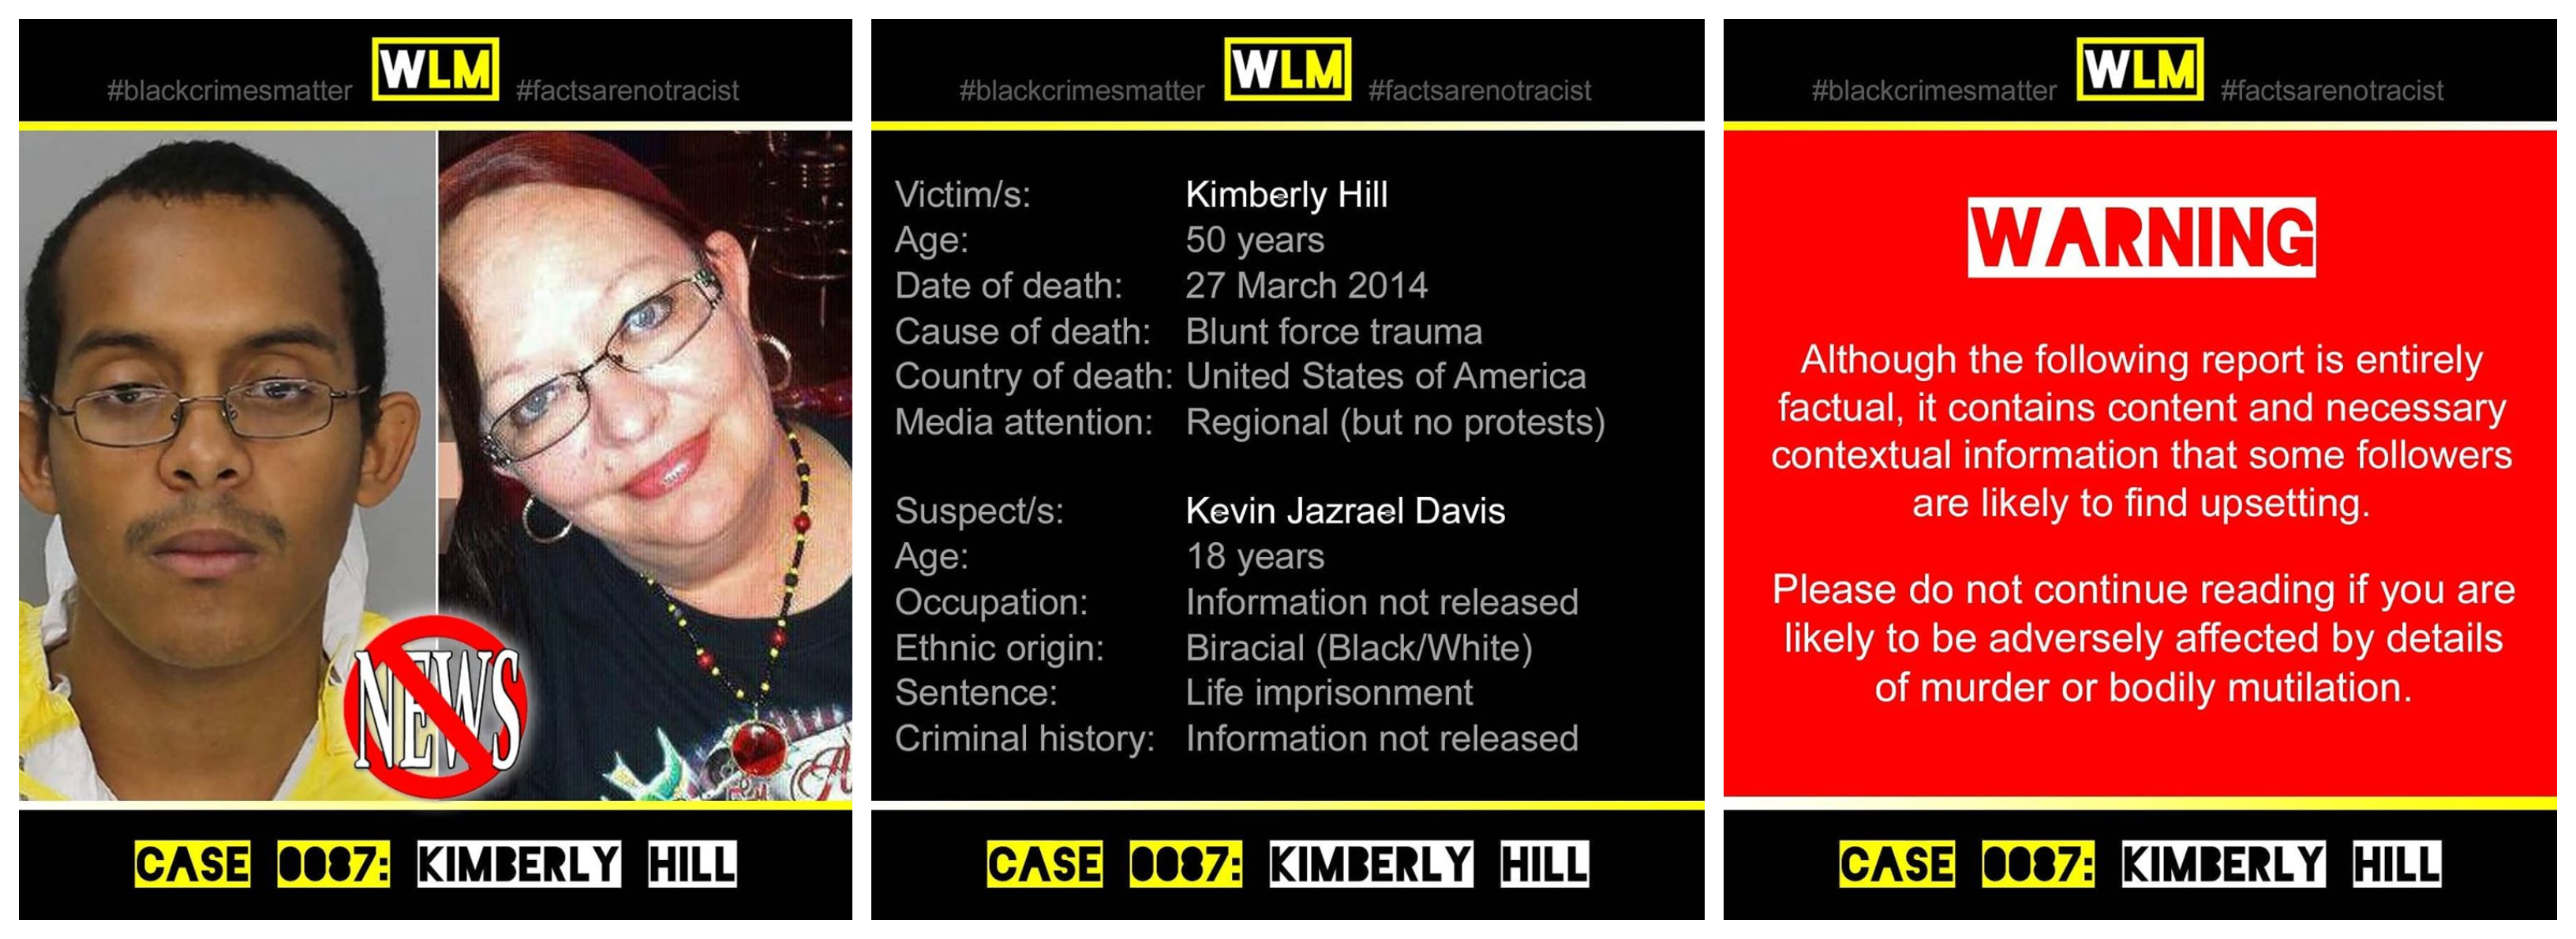 case-087-kimberly-hill